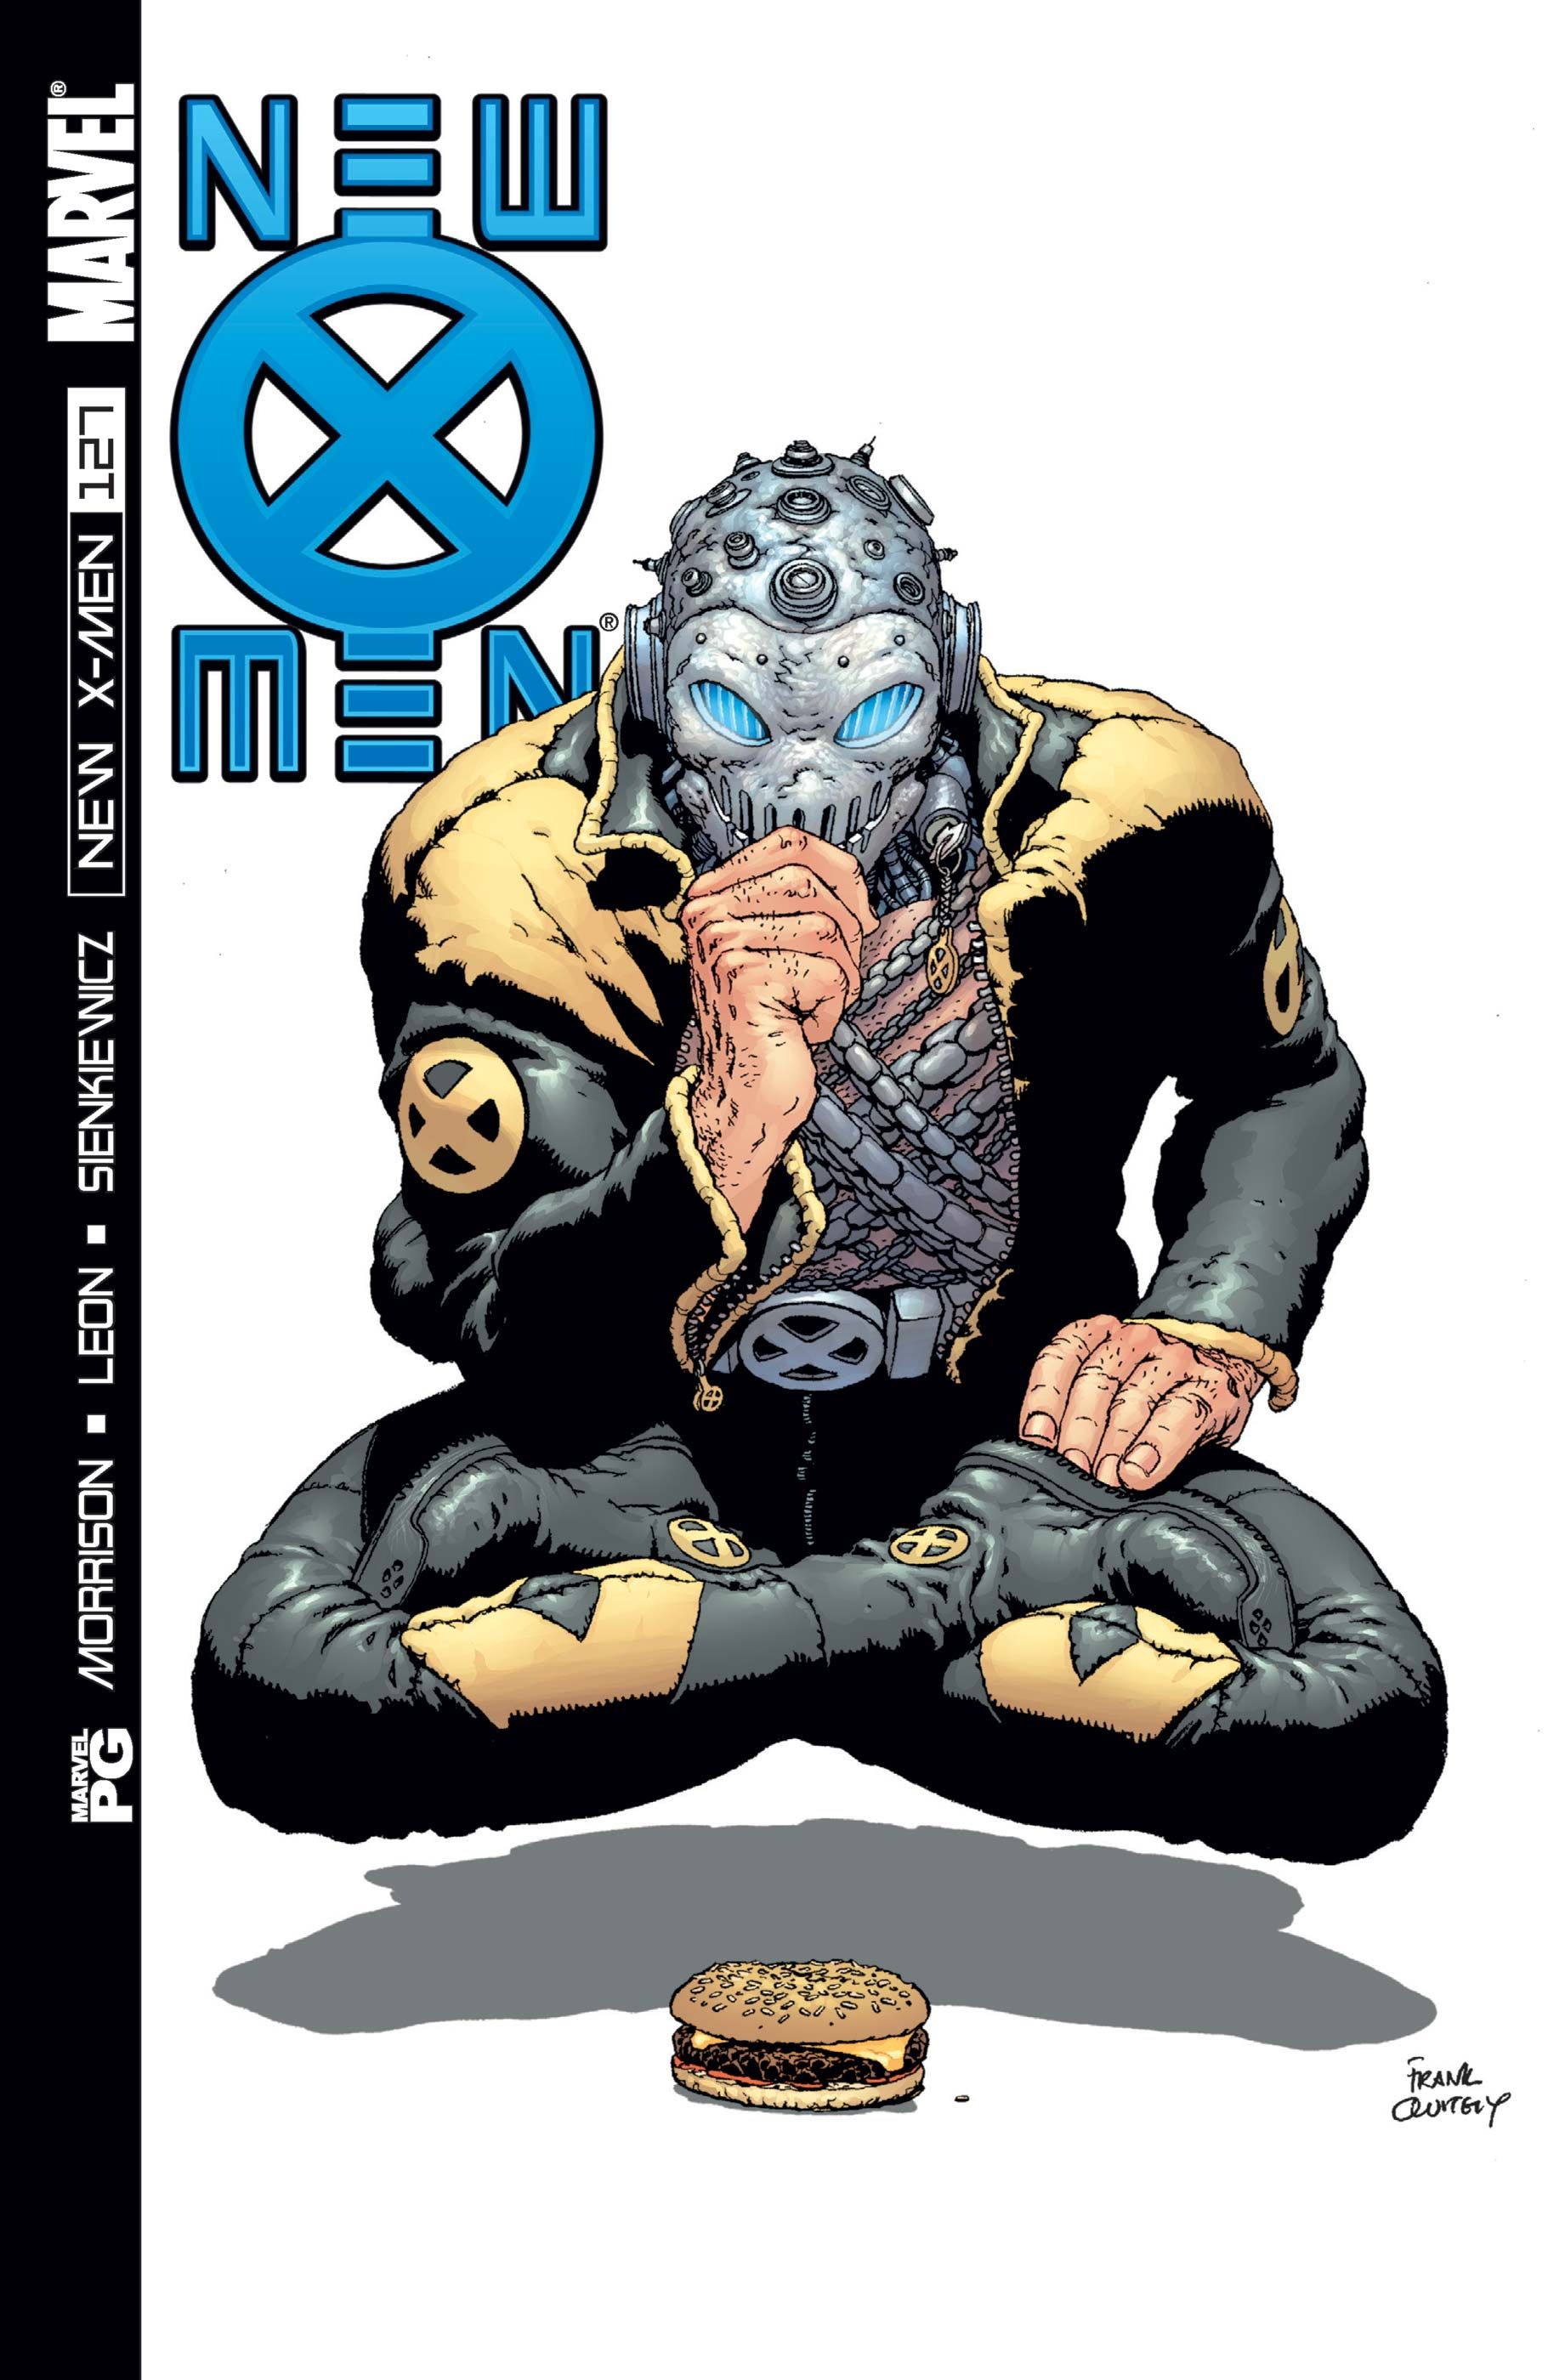 Xorn on Frank Quitely's cover to New X-Men #127